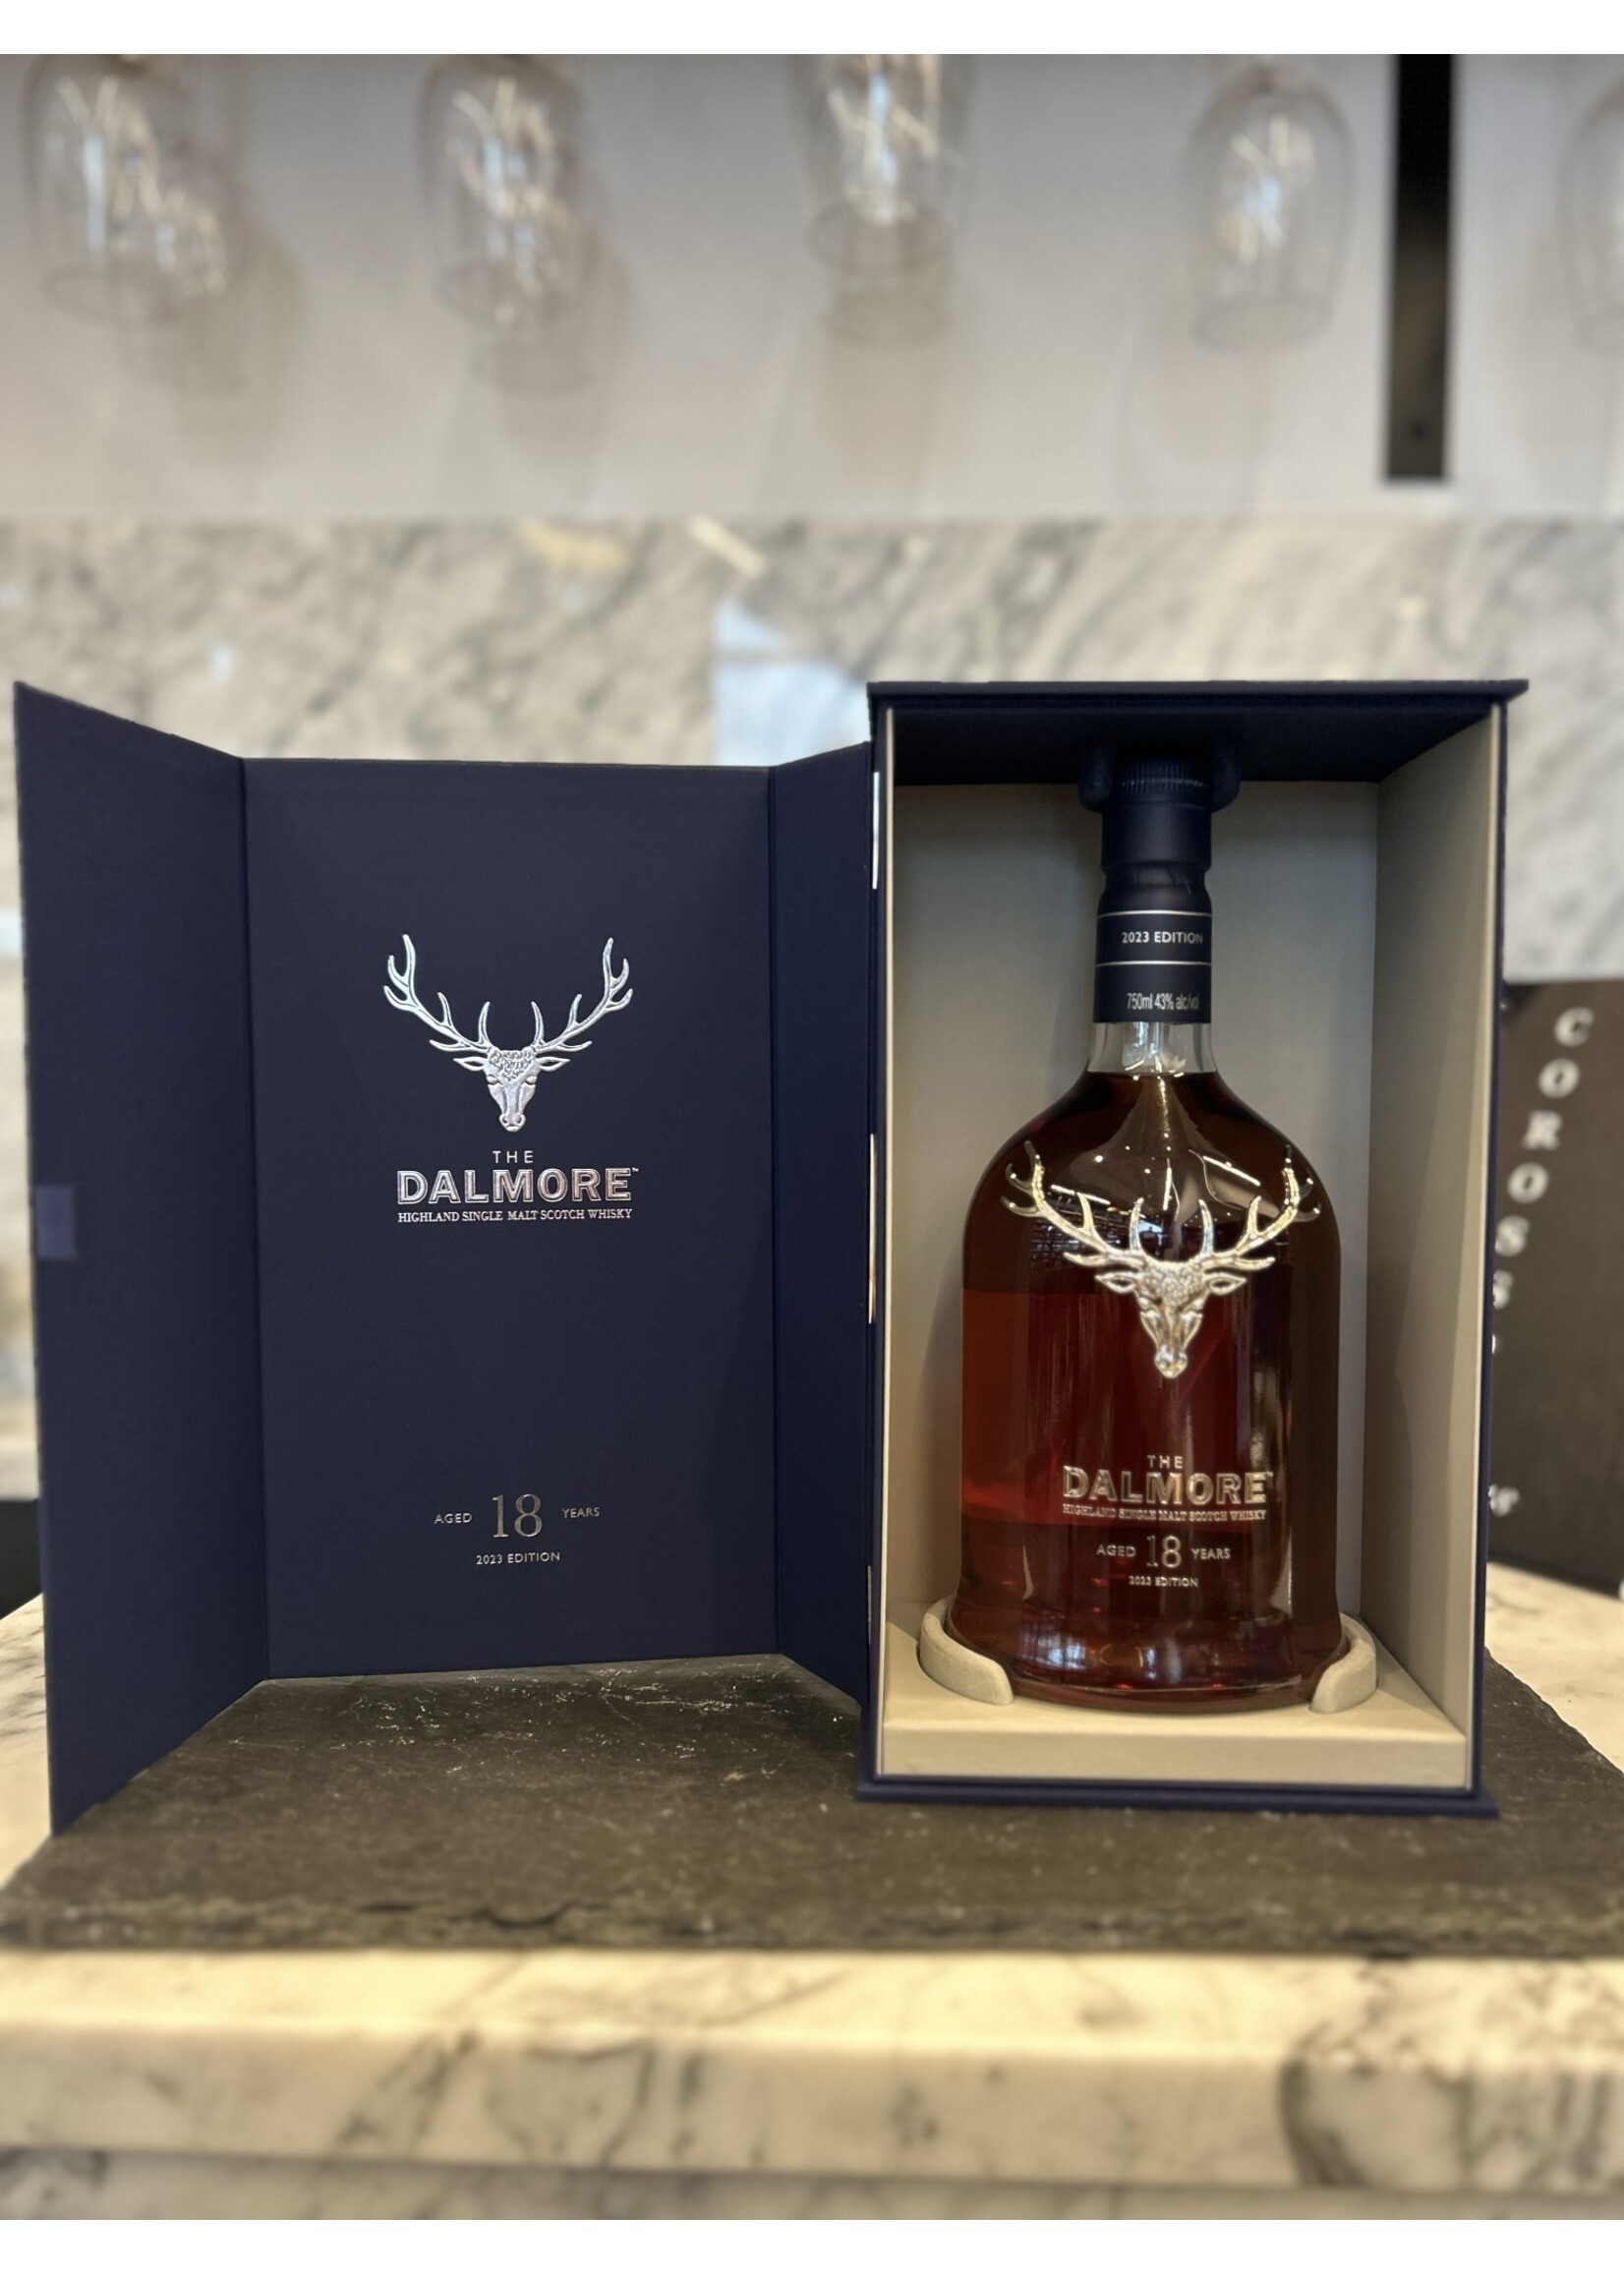 Dalmore The Dalmore Highland Single Malt Scotch Whiskey 18yr